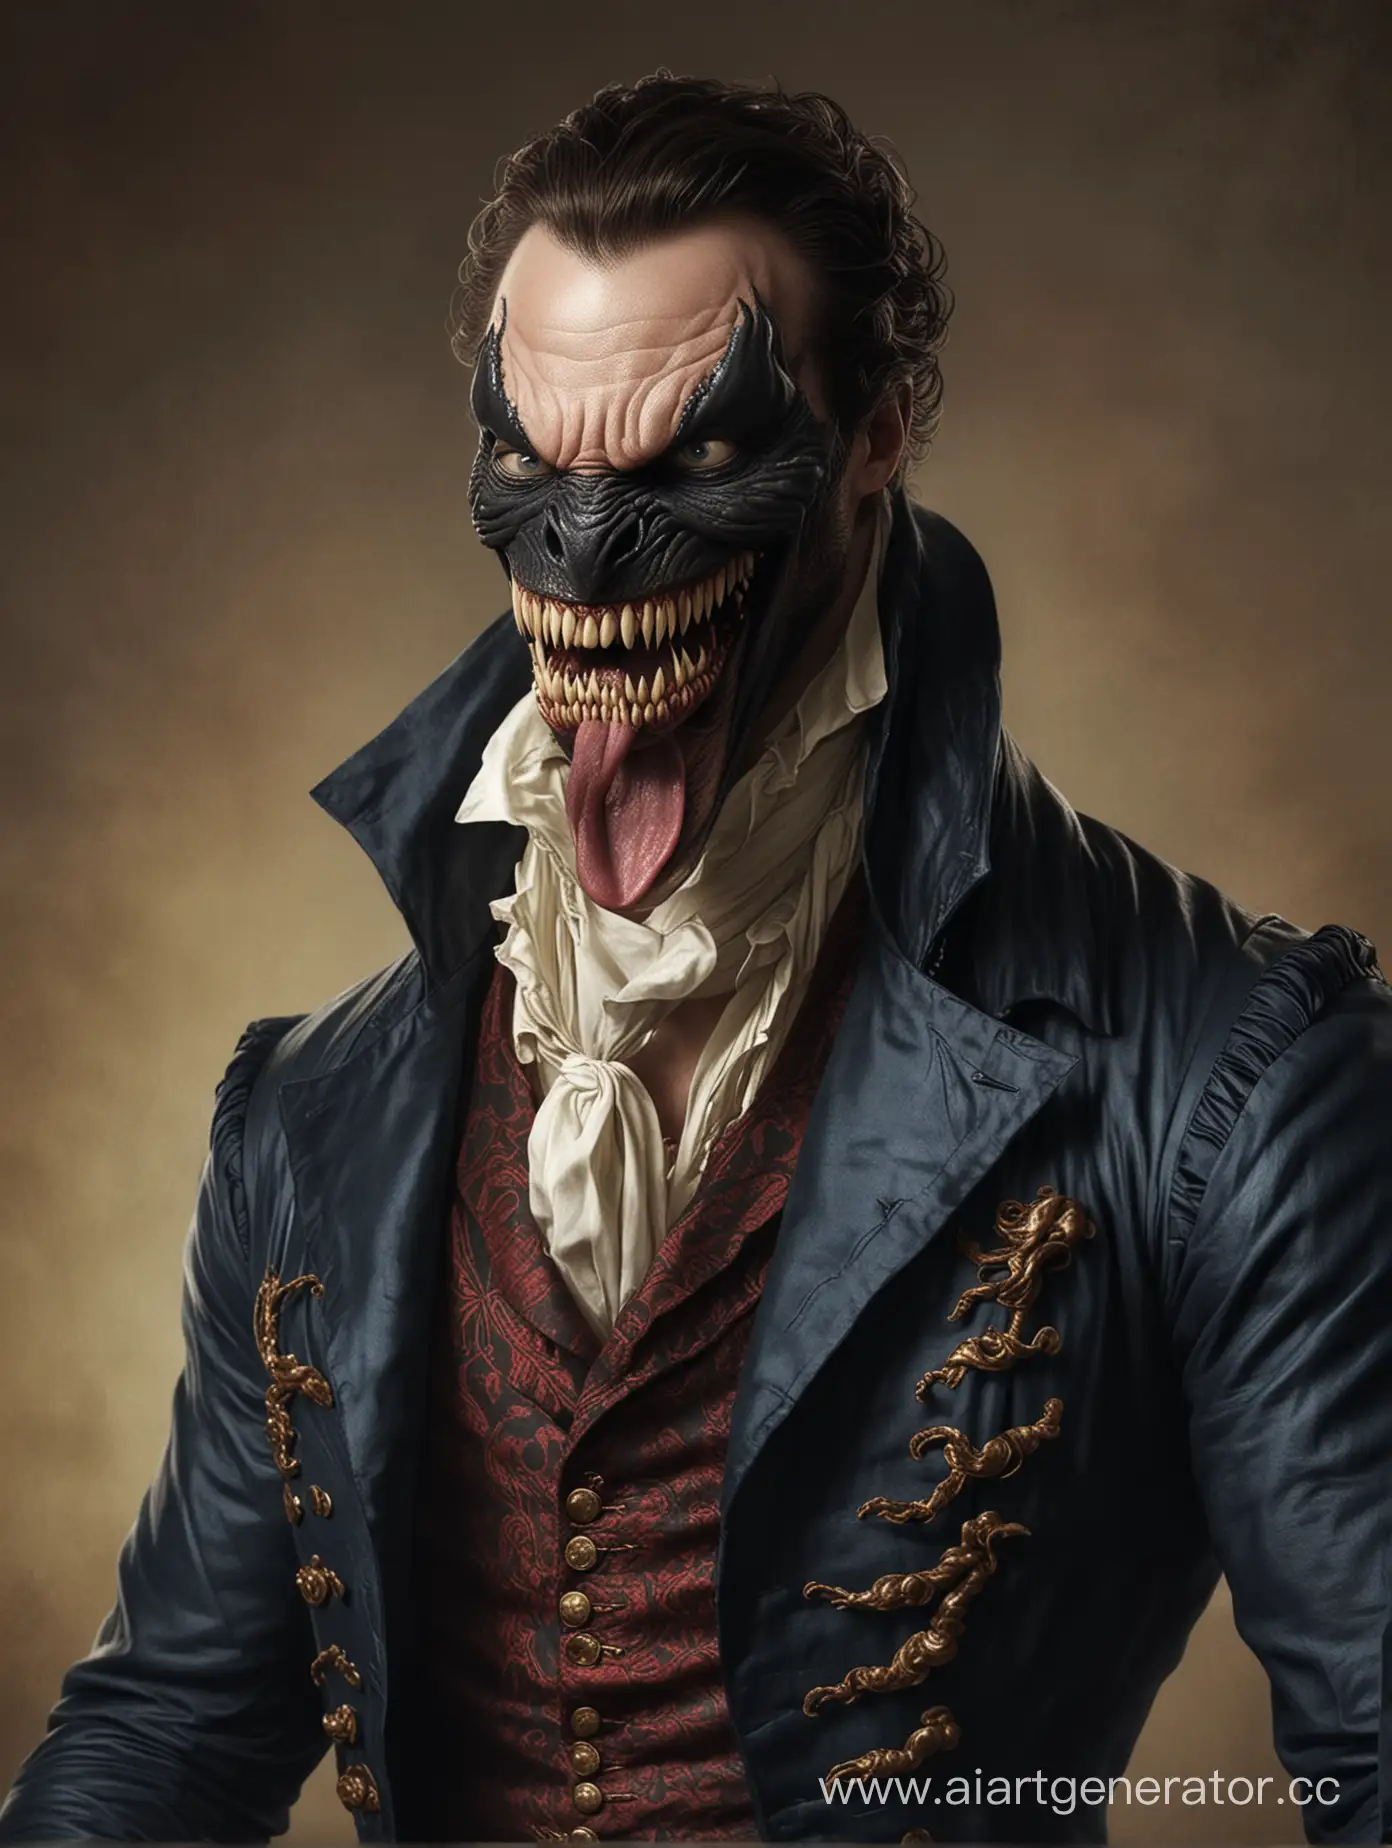 Venom-in-18th-Century-Regalia-Artistic-Representation-of-the-Infamous-Symbiote-Embracing-Historical-Fashion